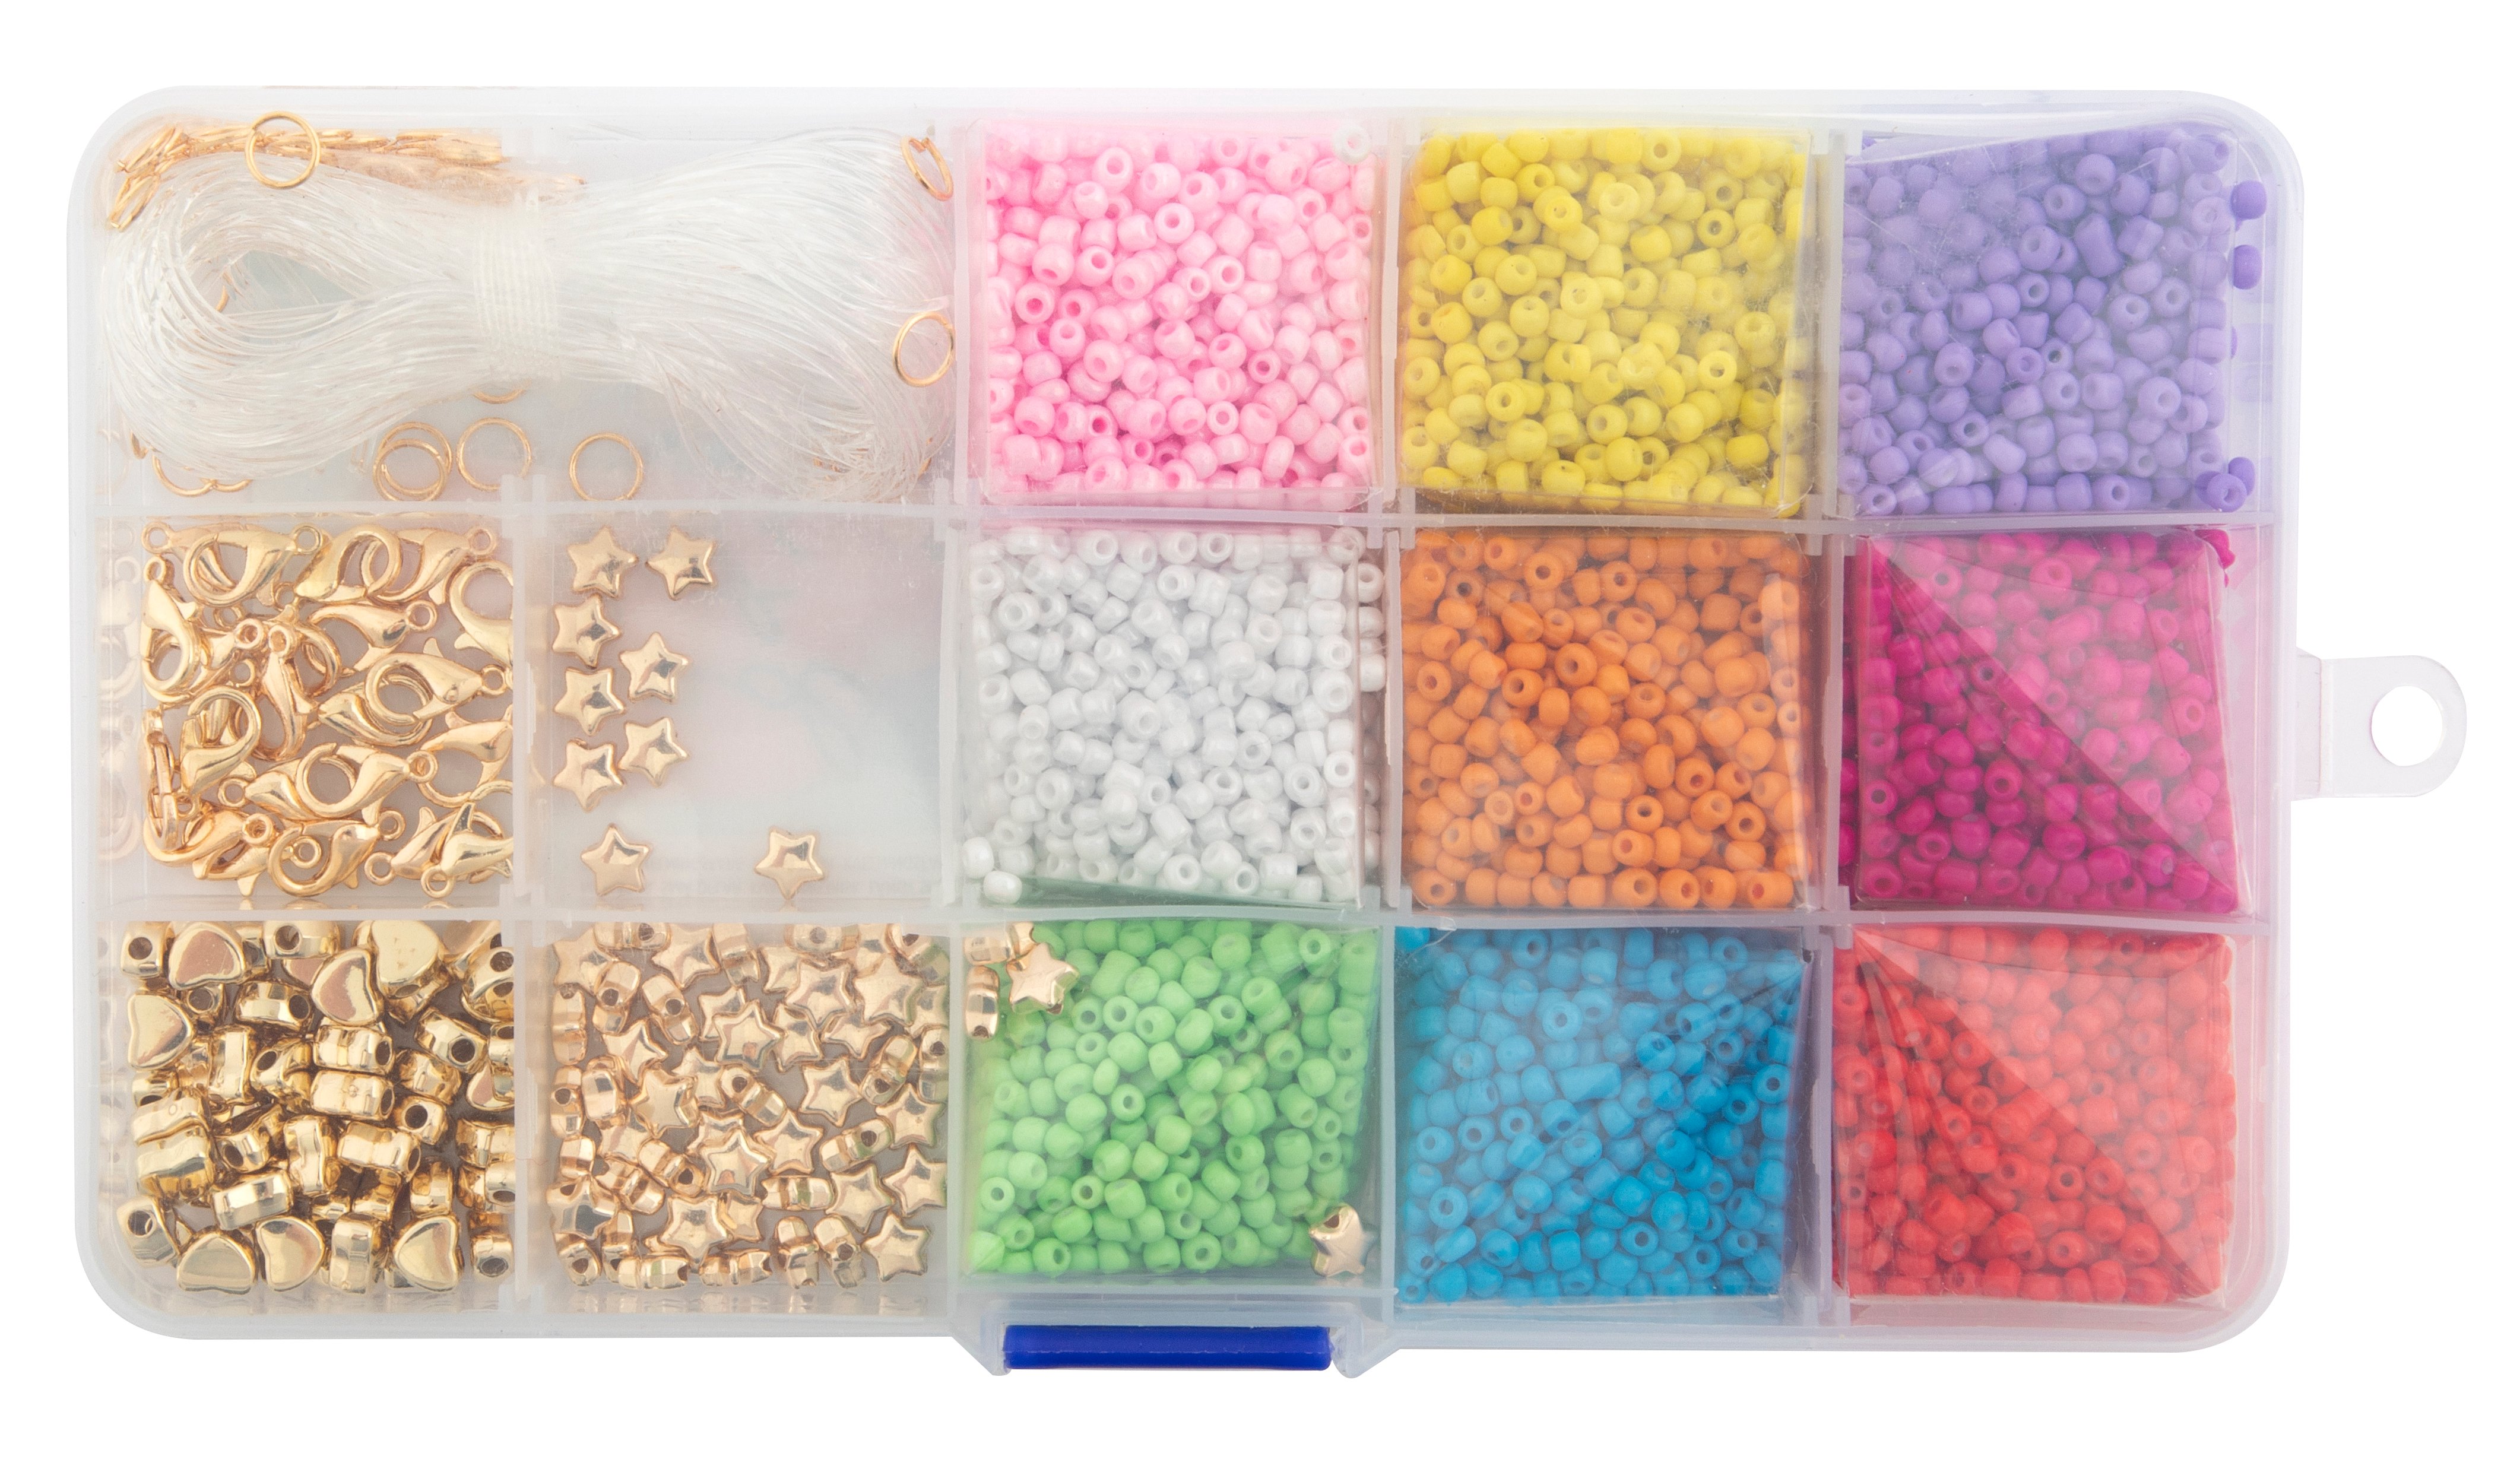 Grafix - Beads in Storage Box incl. Thread (240022)